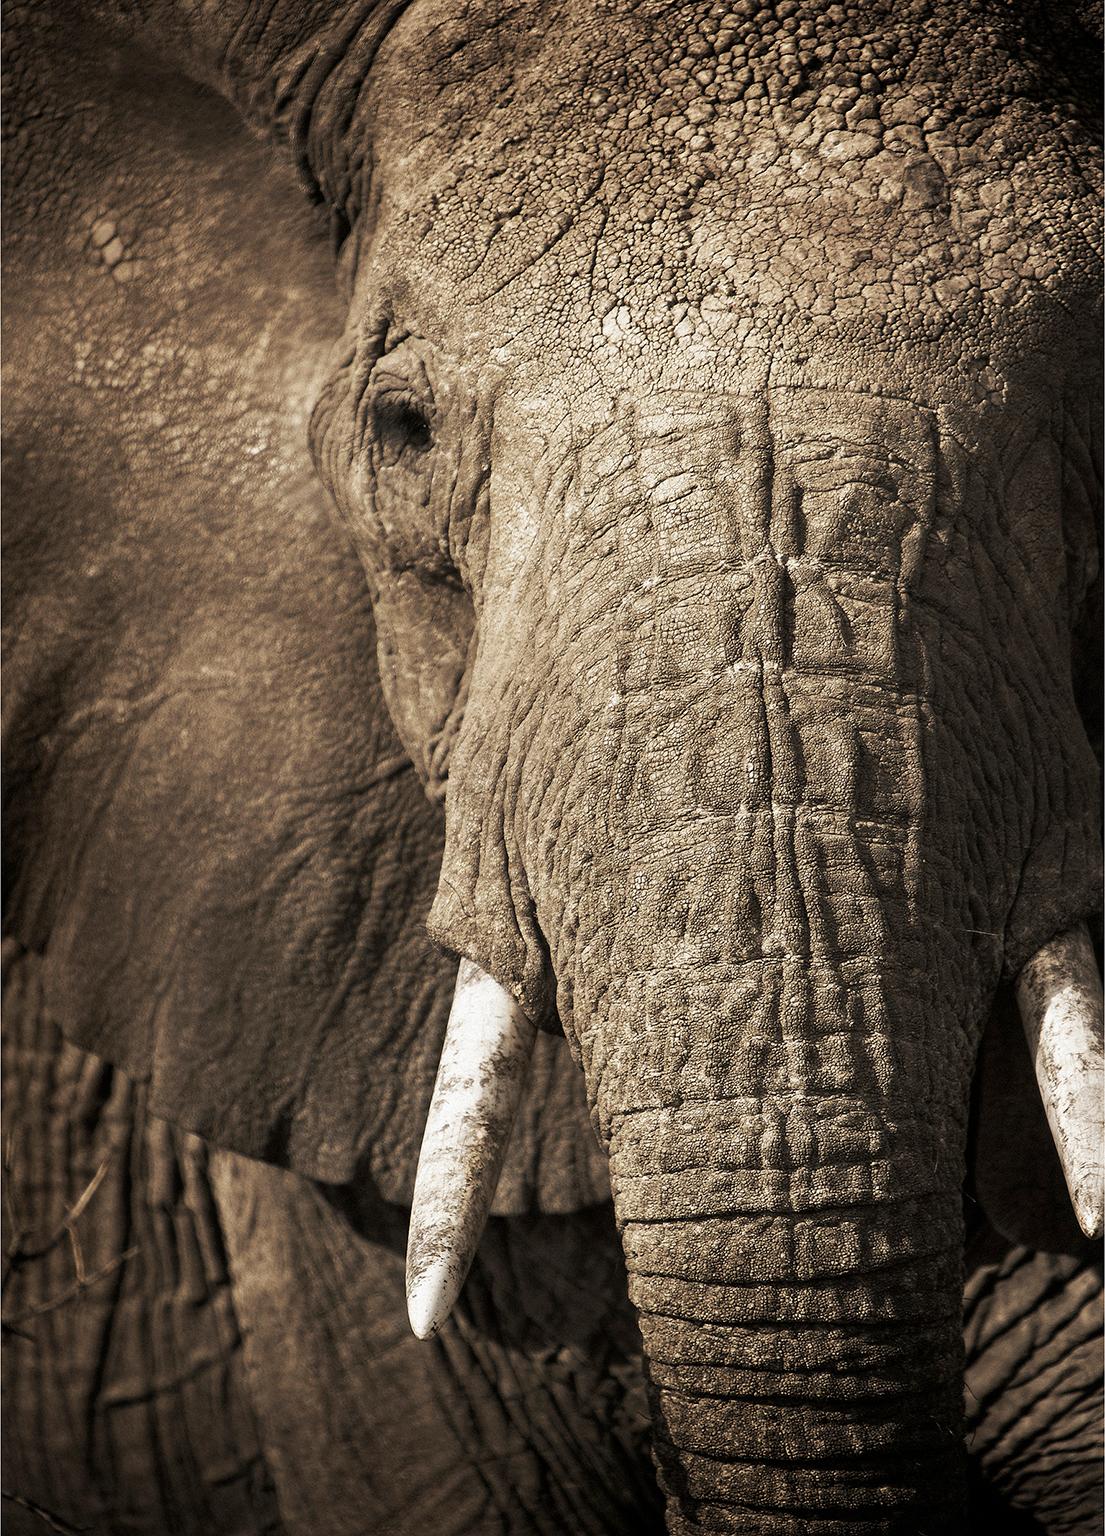 Chris Gordaneer Black and White Photograph - Elephant-04, Namibia.